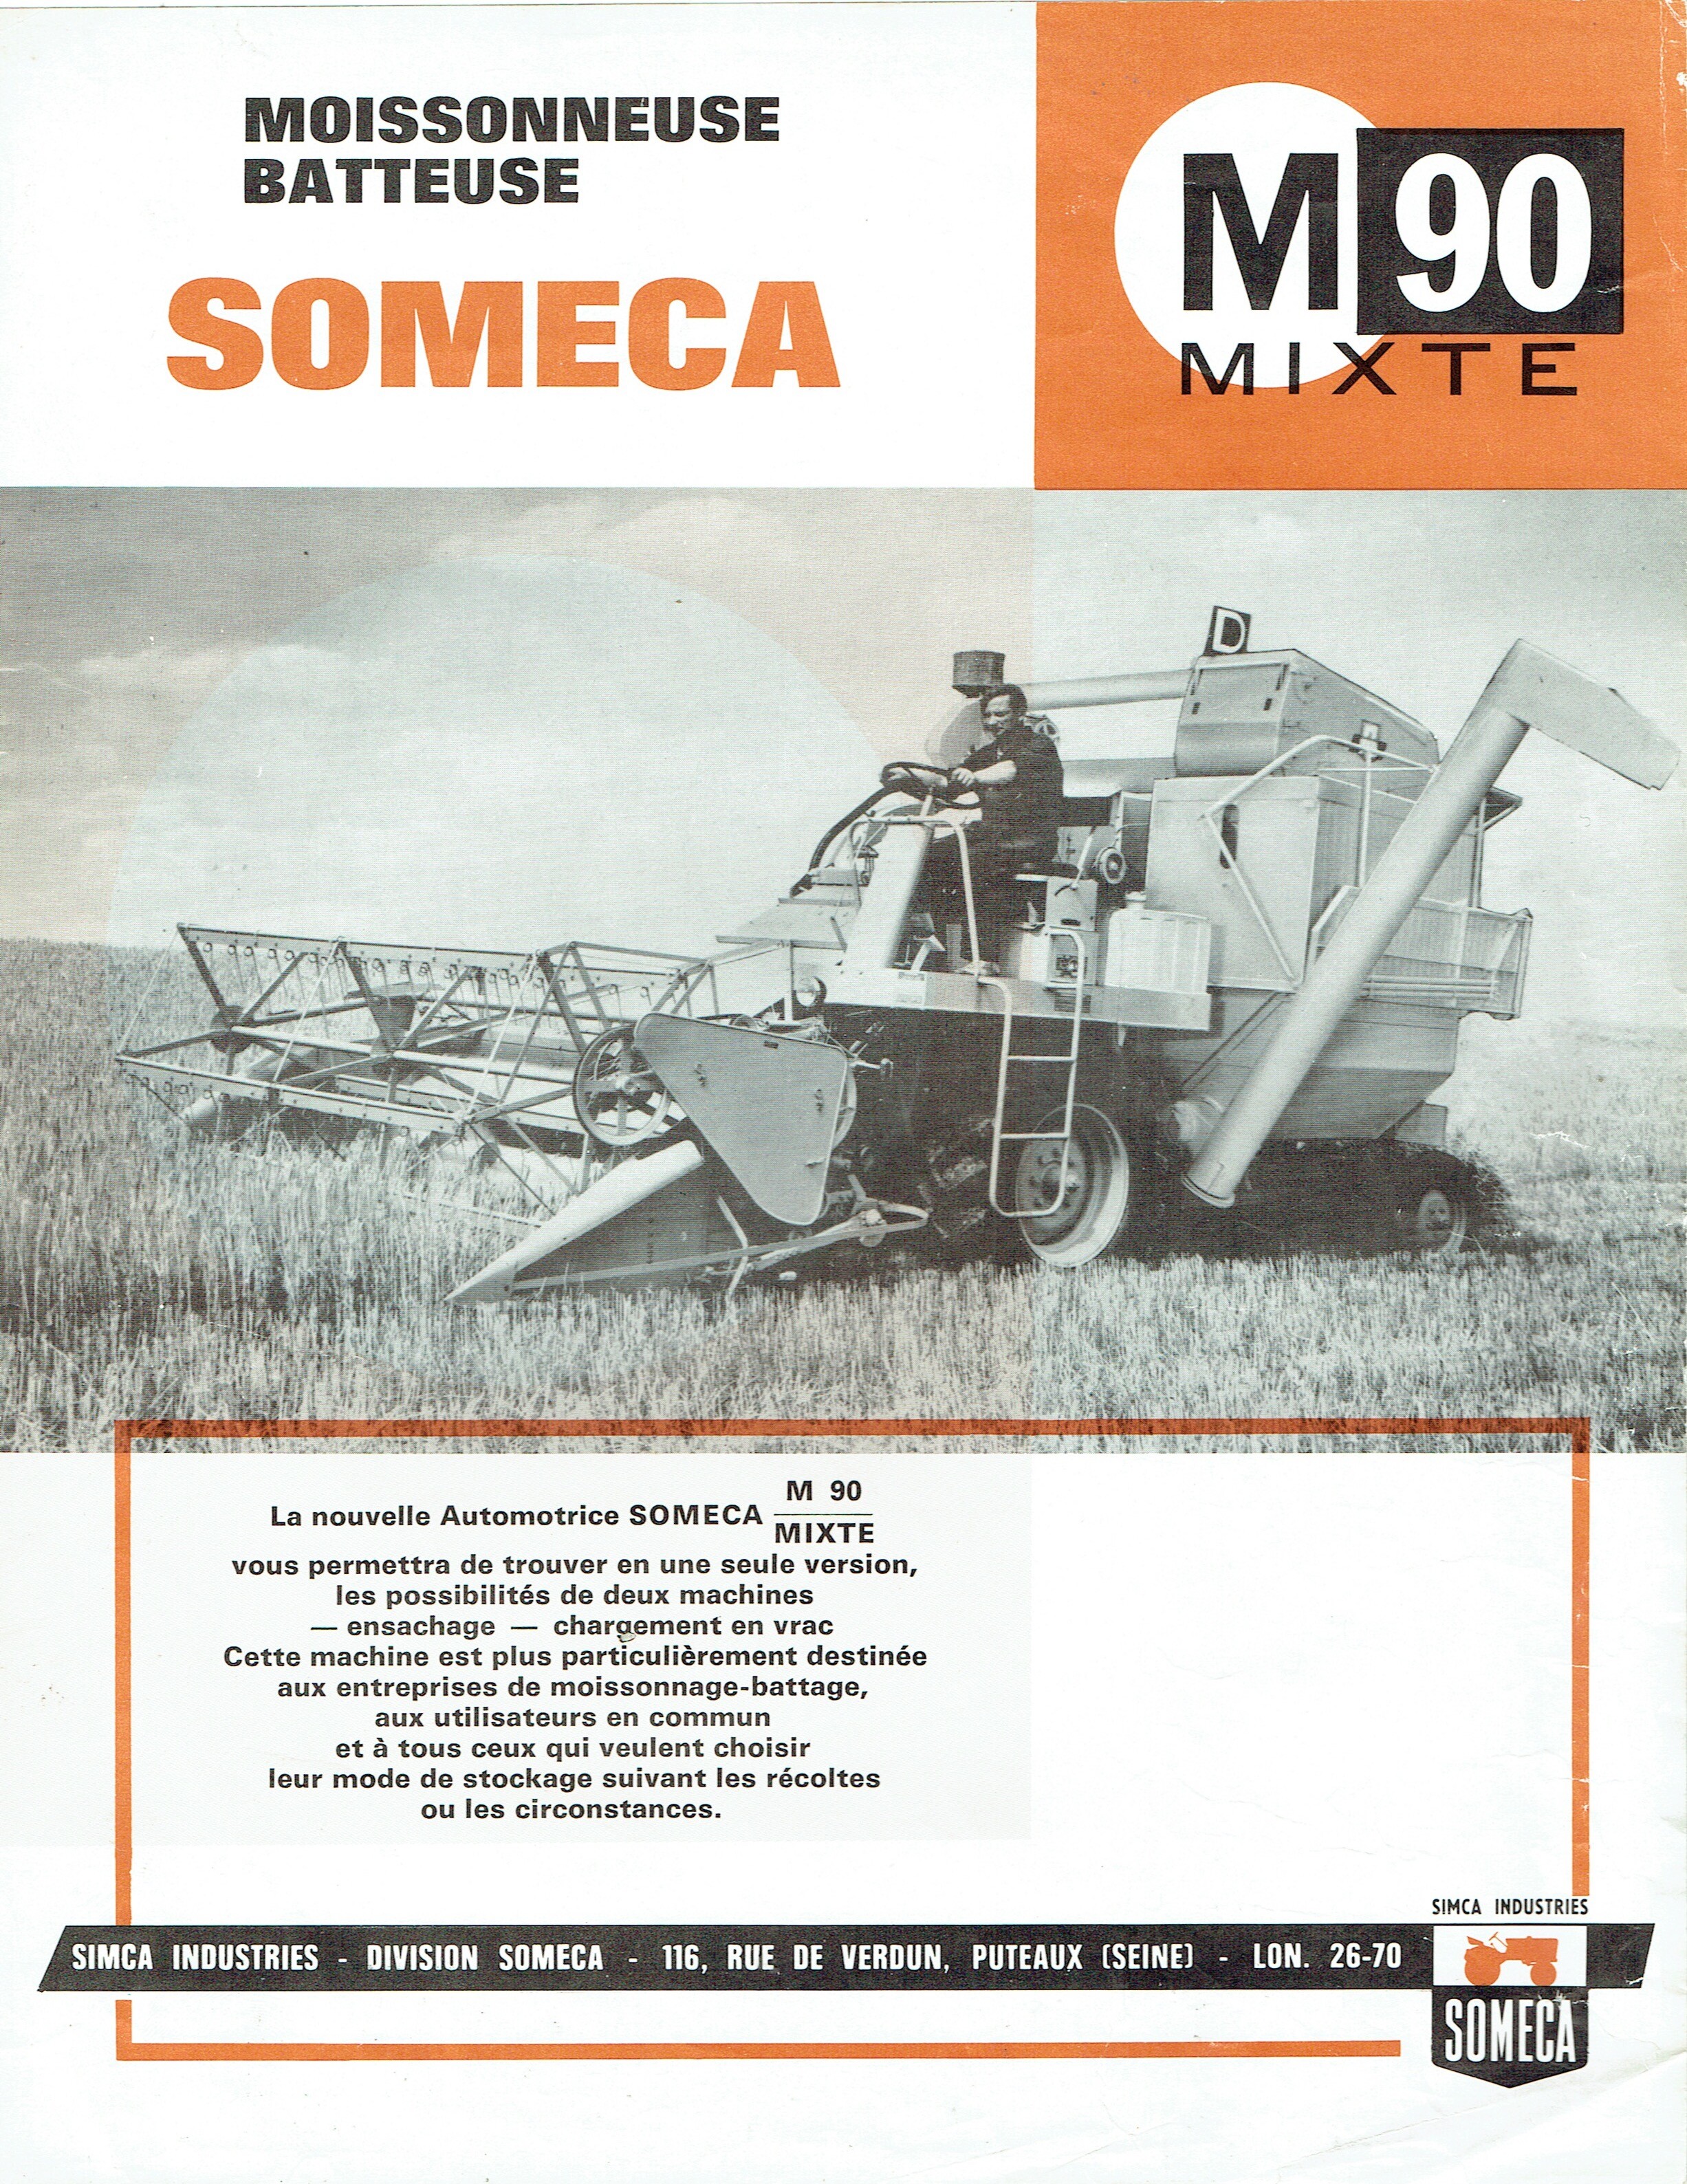 Someca M90 (Mähdrescherarchiv Kühnstetter CC BY-NC-SA)